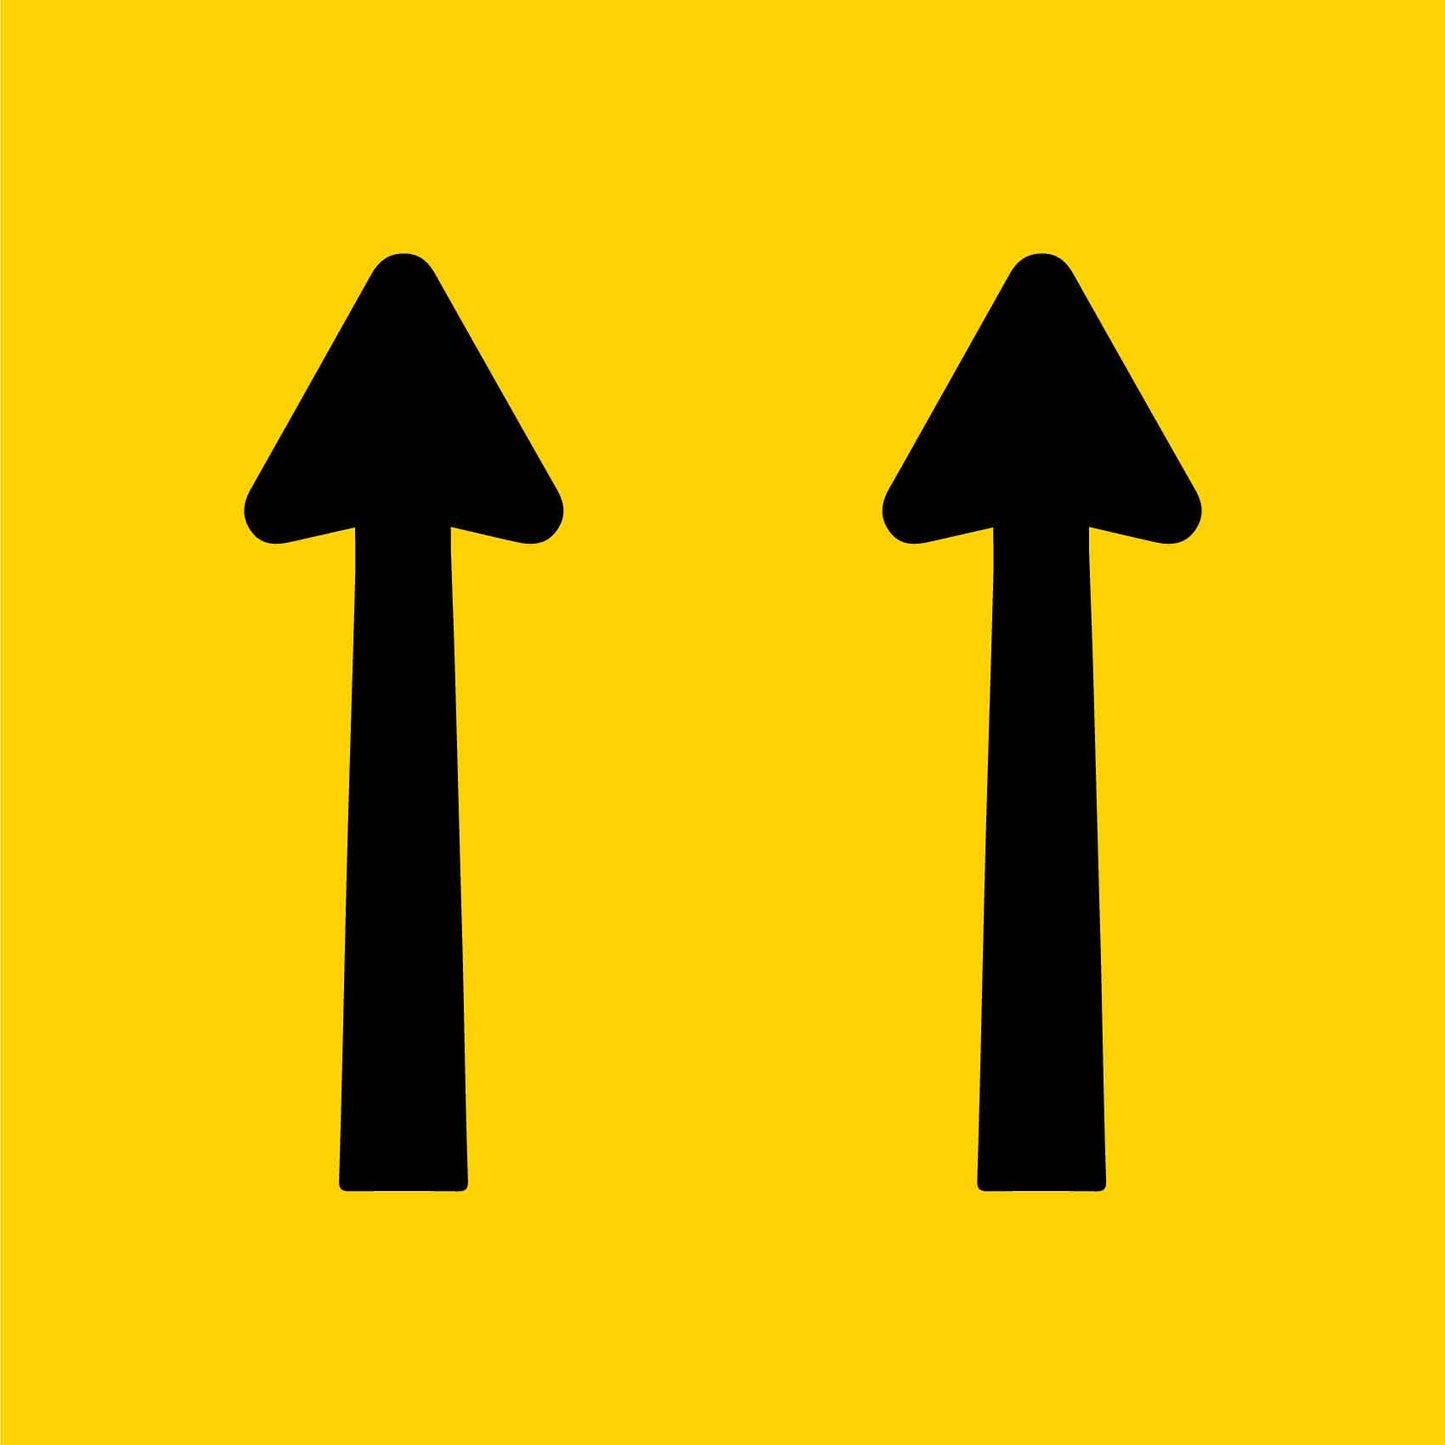 2 Straight Arrows Multi Message Traffic Sign